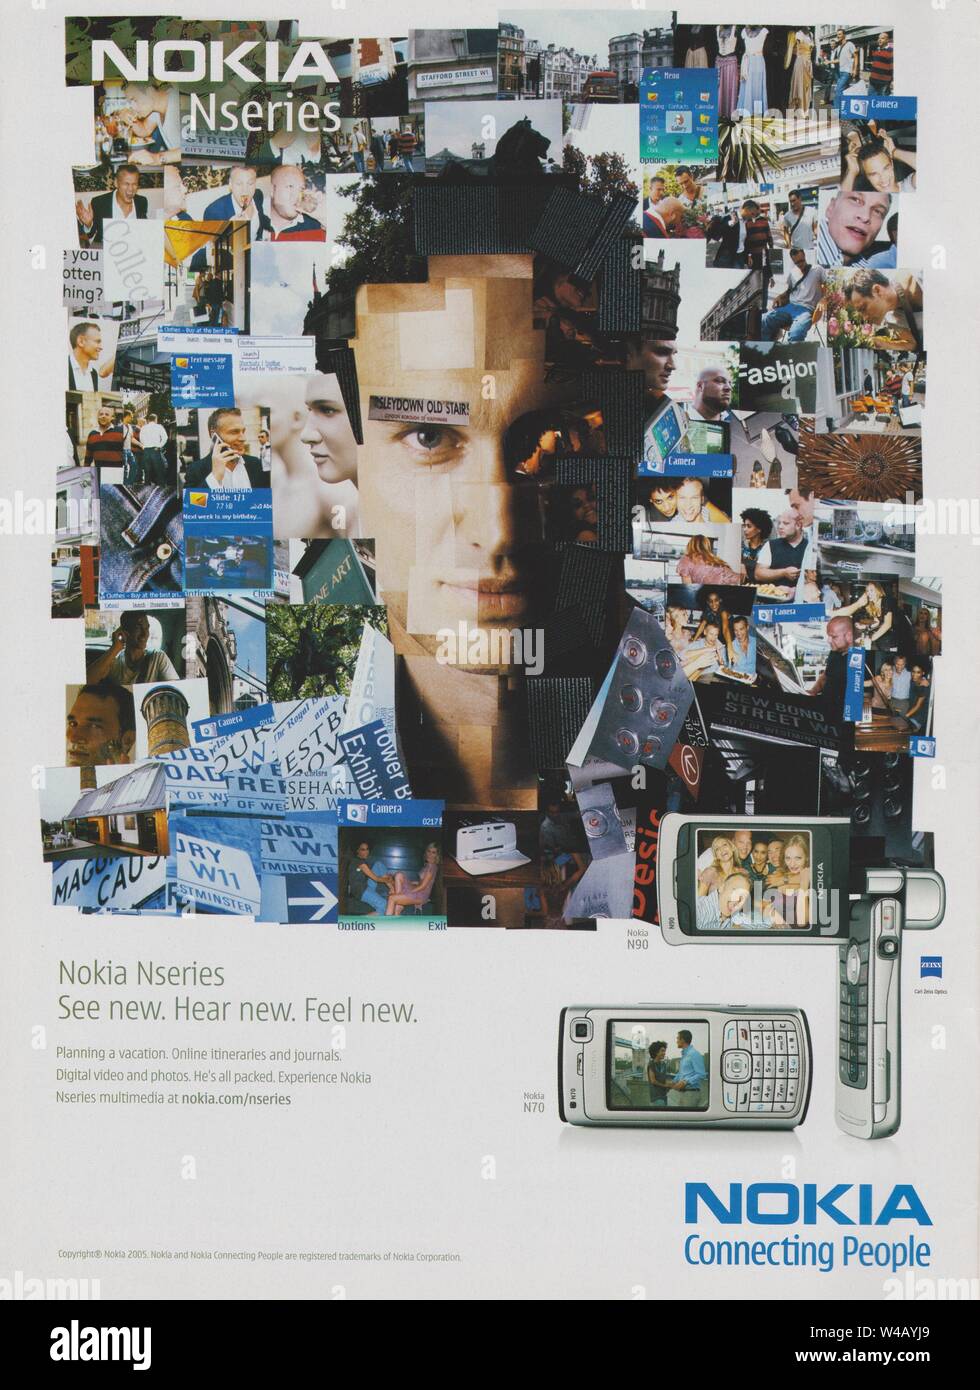 Poster pubblicitari Nokia Nseries N70, N90 telefono in magazzino dal 2006, Nokia Connecting People slogan pubblicitario, creative Nokia 2000s annuncio Foto Stock